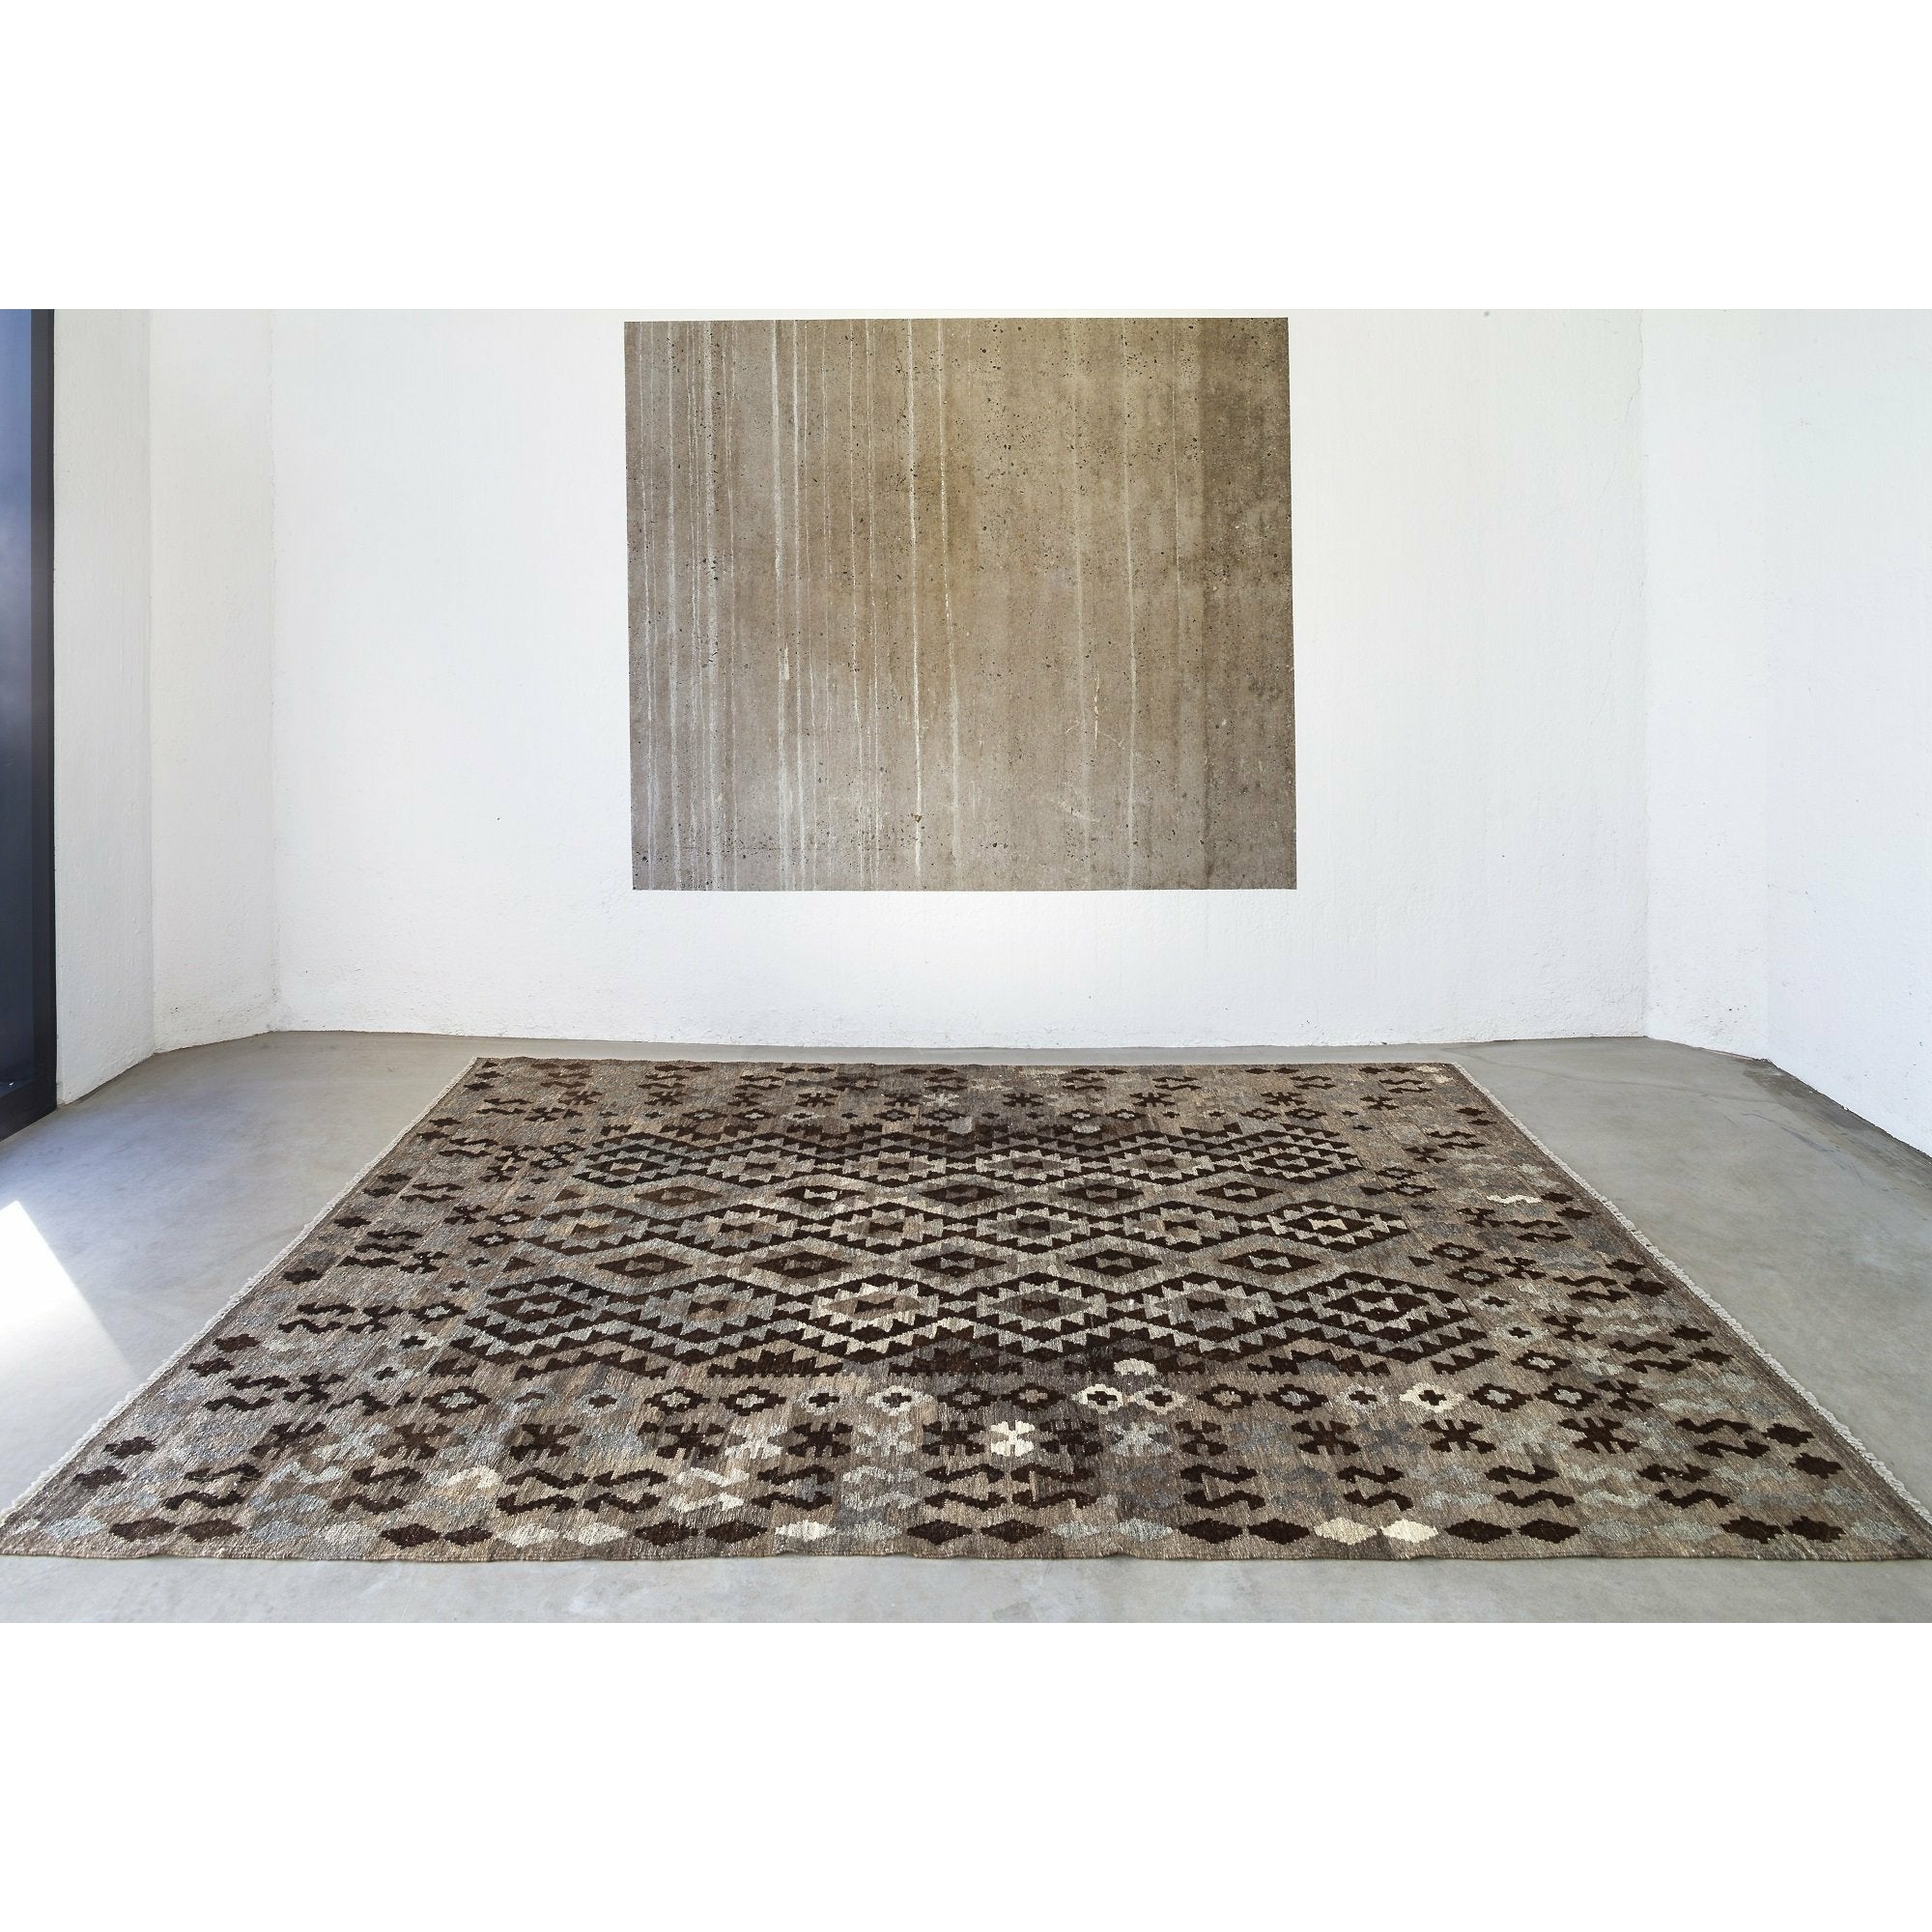 Massimo Kelim tapis naturel gris foncé / brun / noir, 170x240 cm